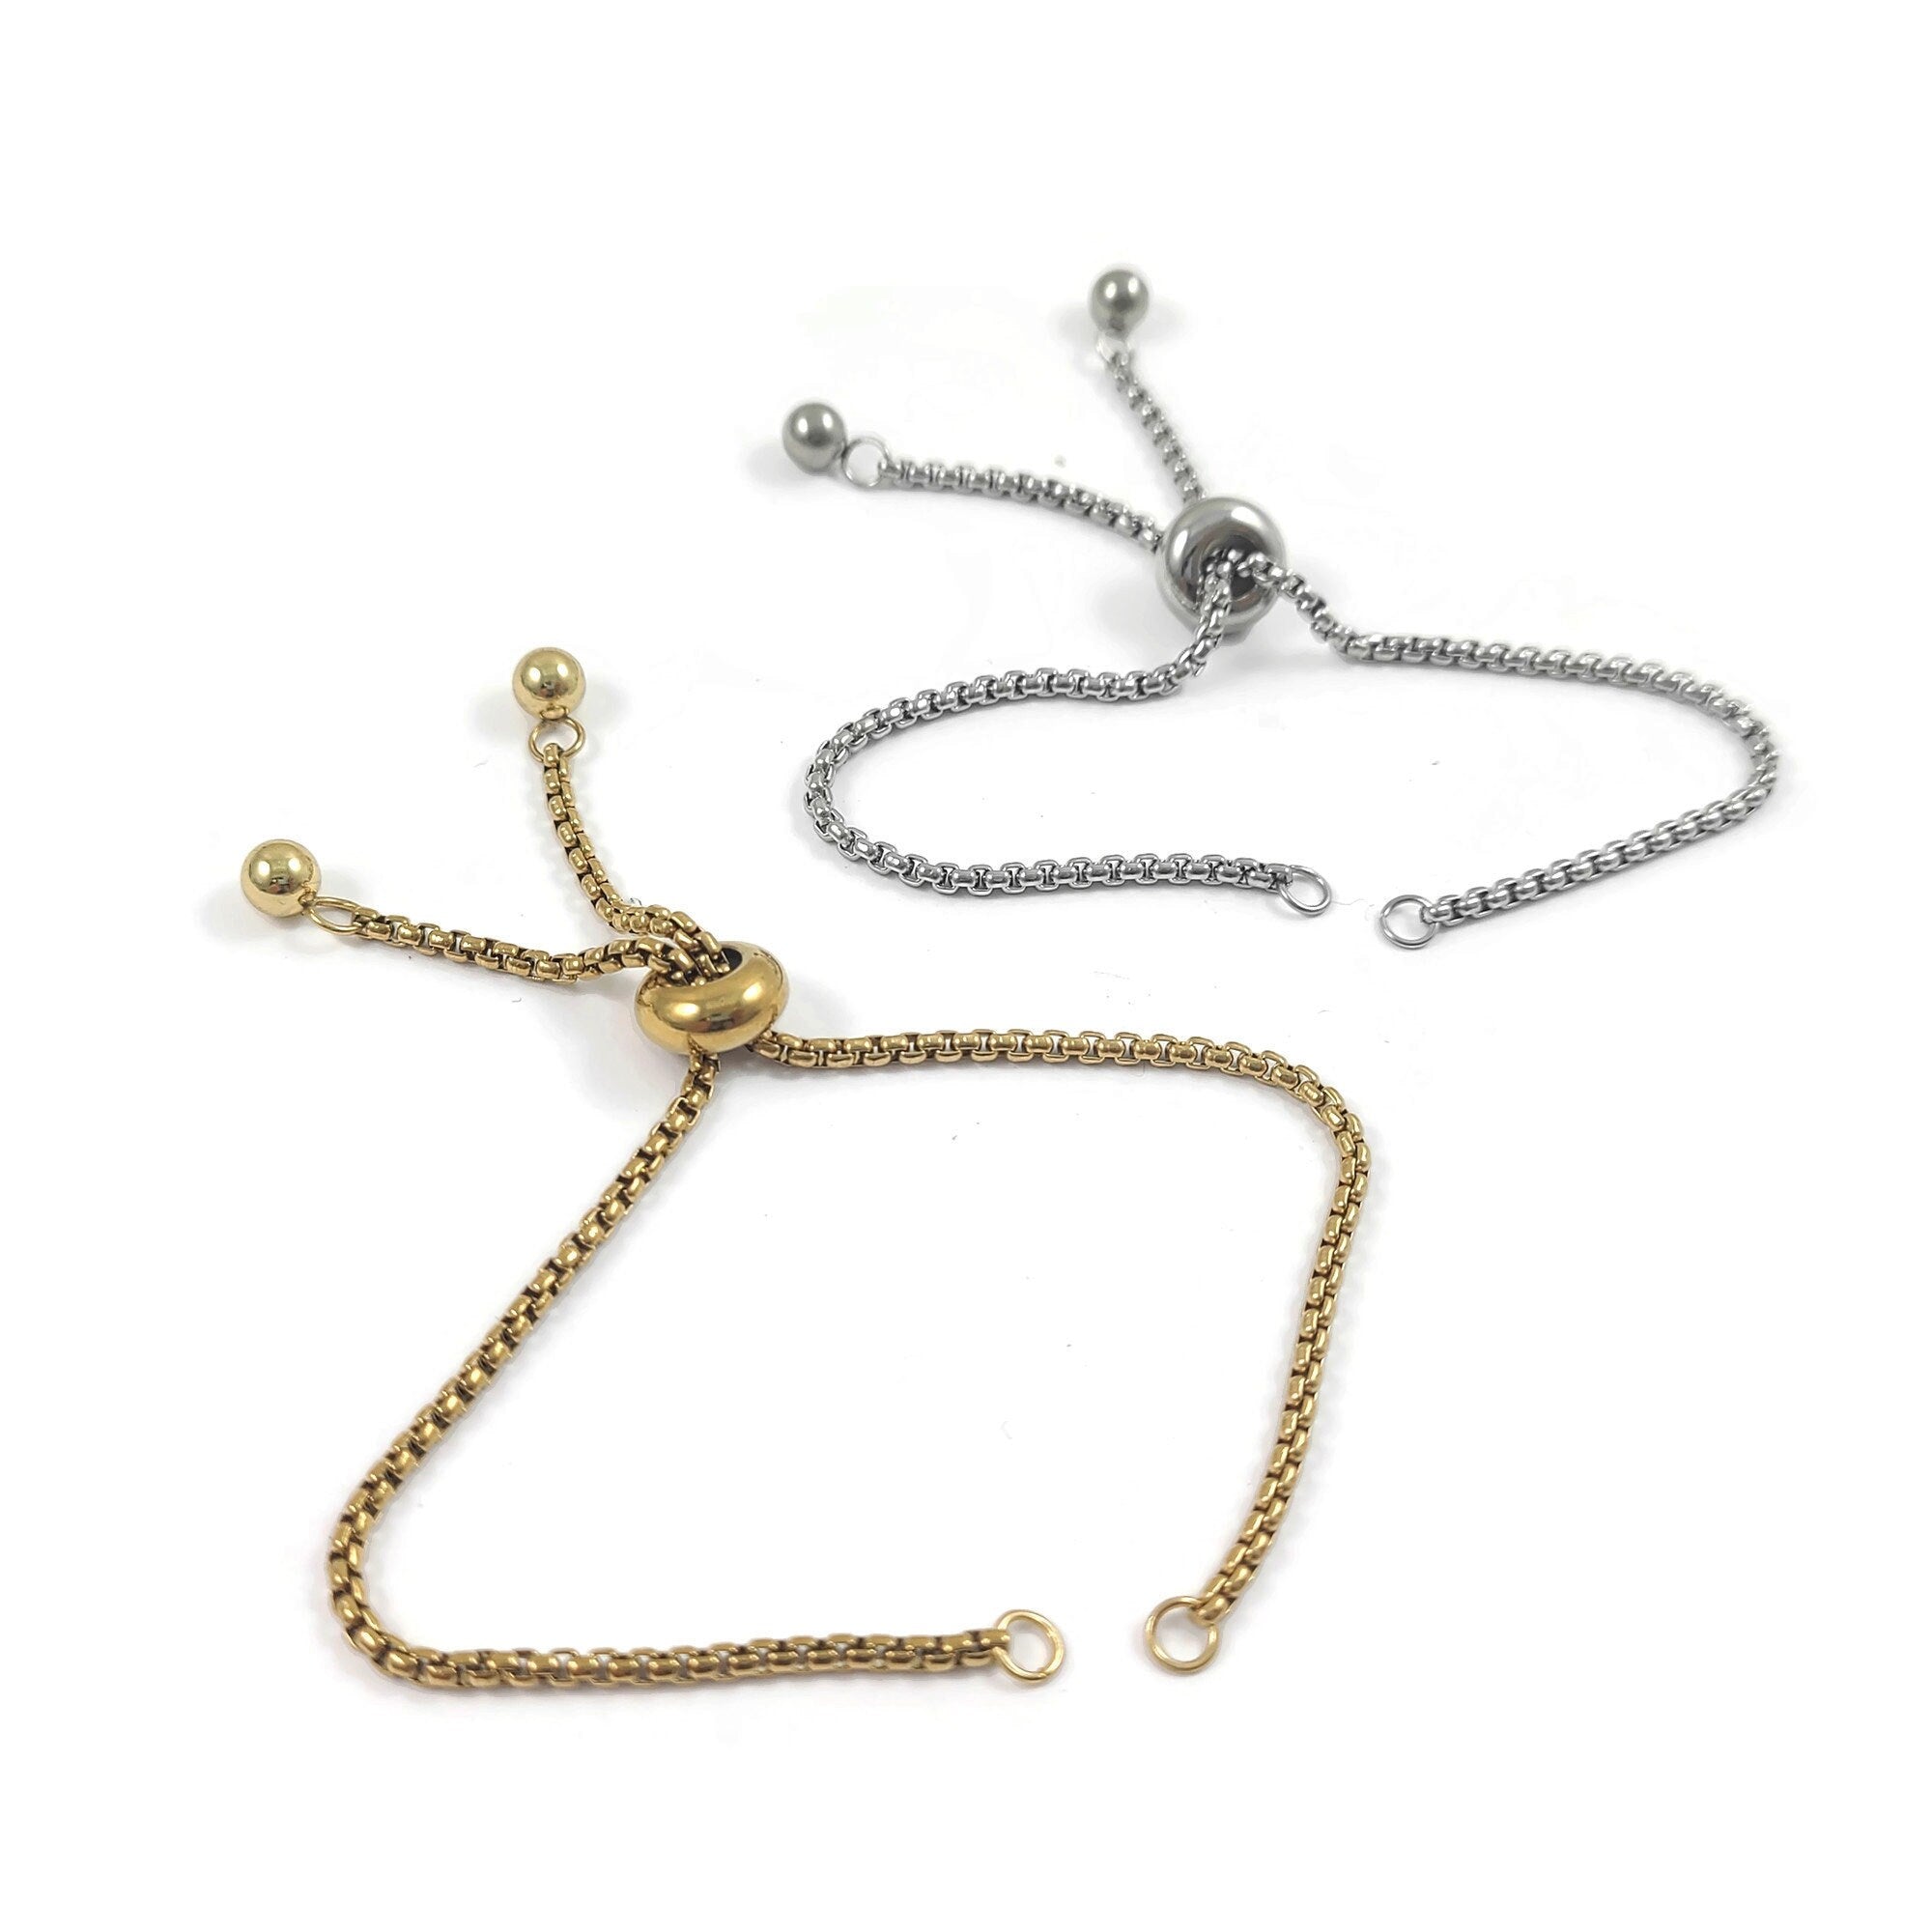 Necklace extender, Stainless steel chain extender, Adjustable bracelet